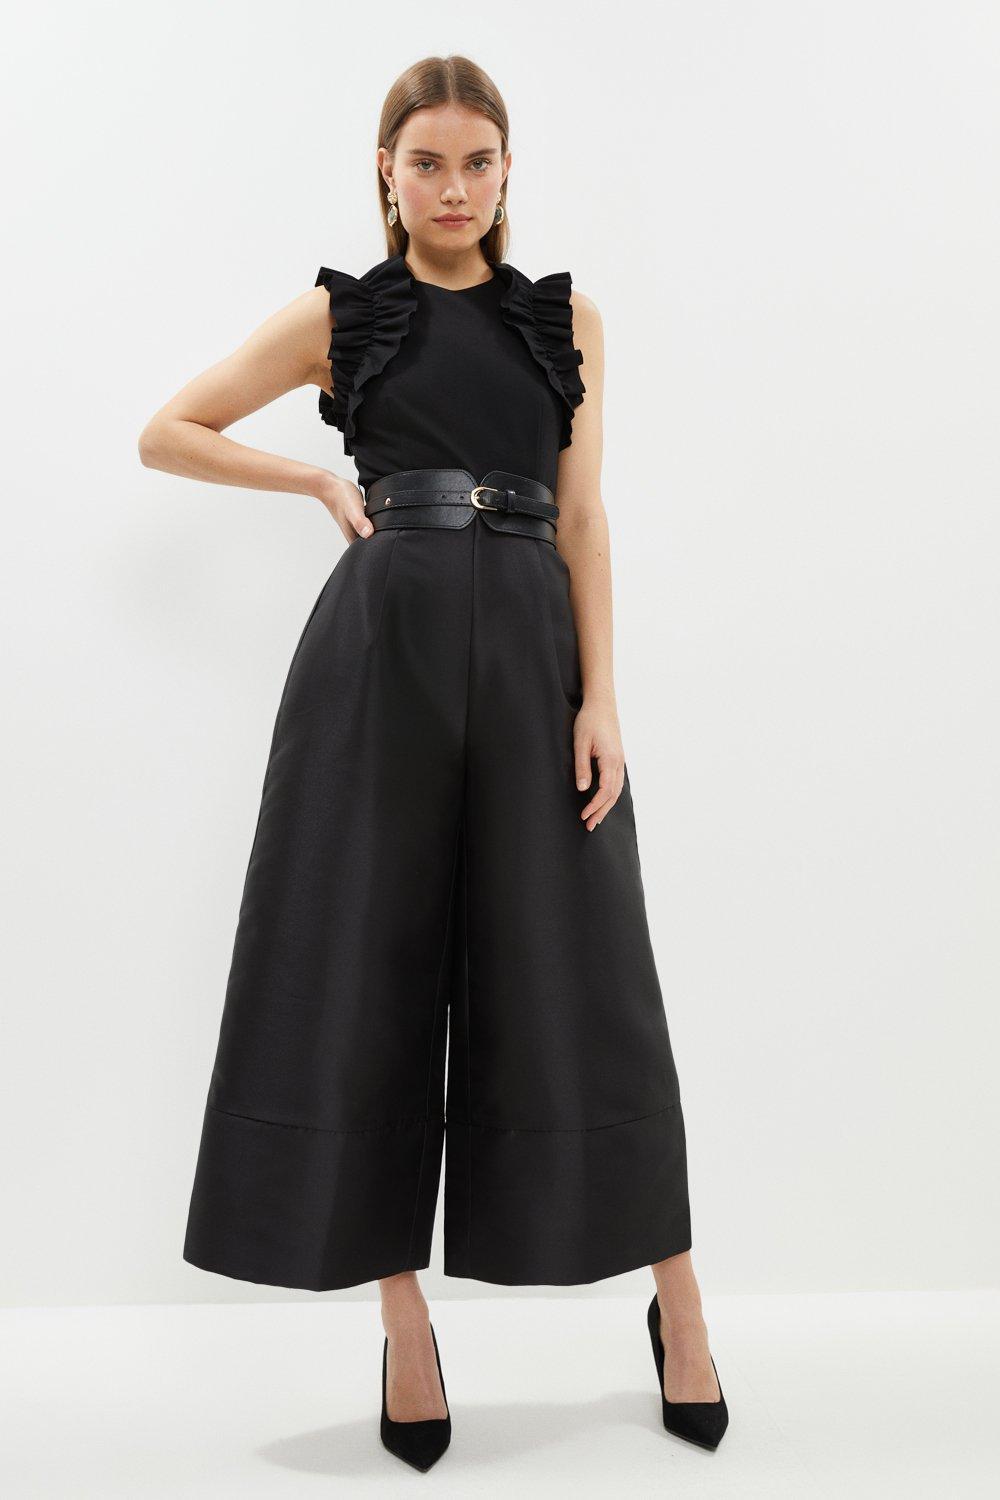 NWT Zara Khaki Green Wrap Jumpsuit with Buckle Belt V neck short sleeve  Fashion | eBay